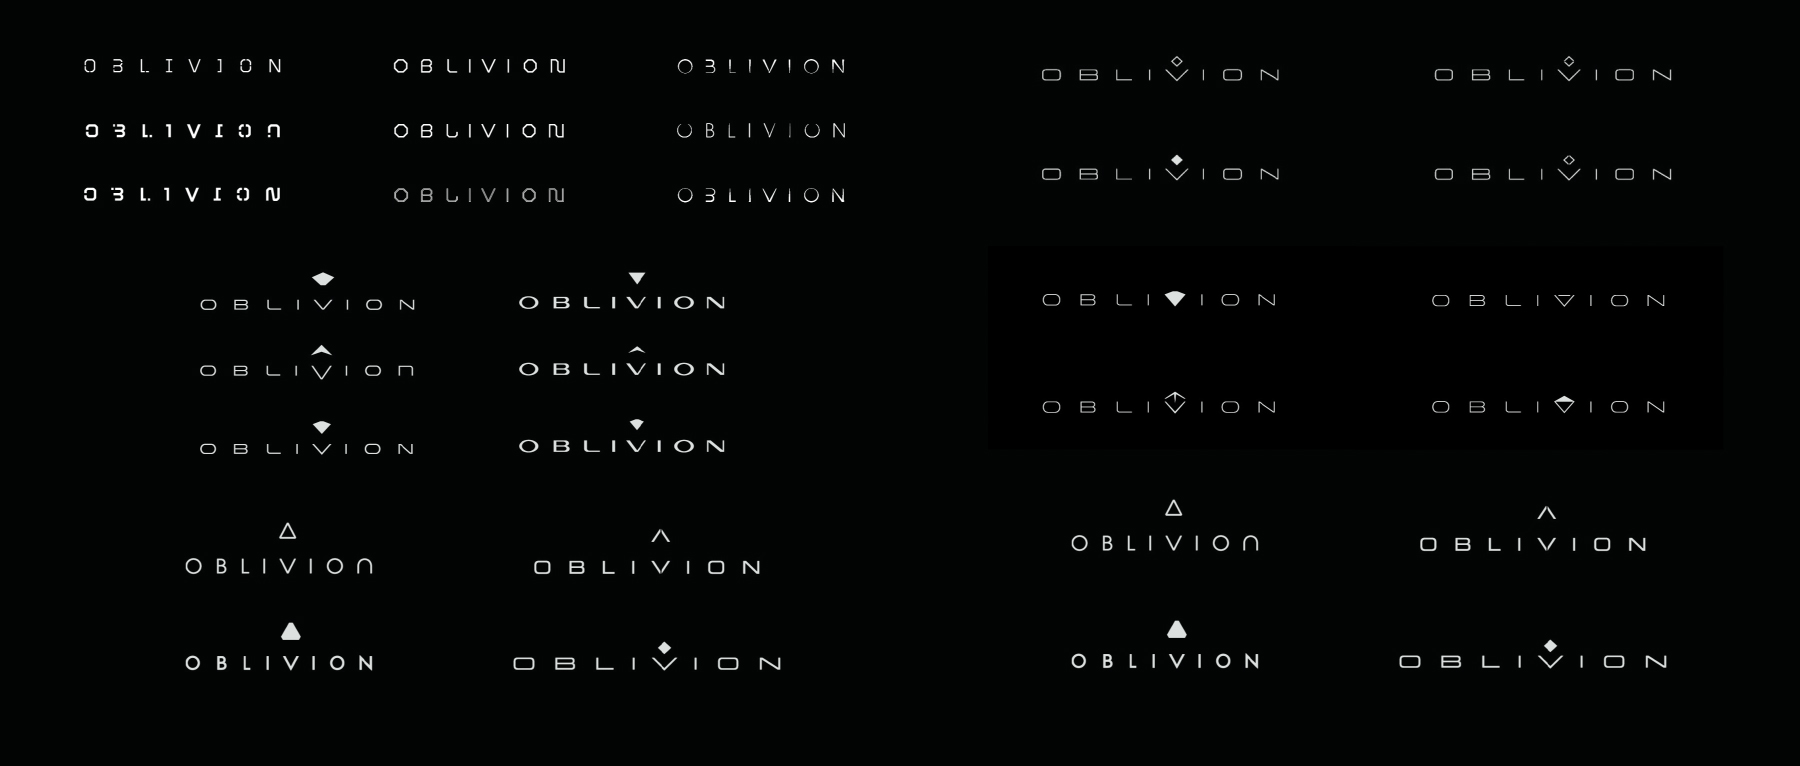 Oblivion_02_00005.jpg